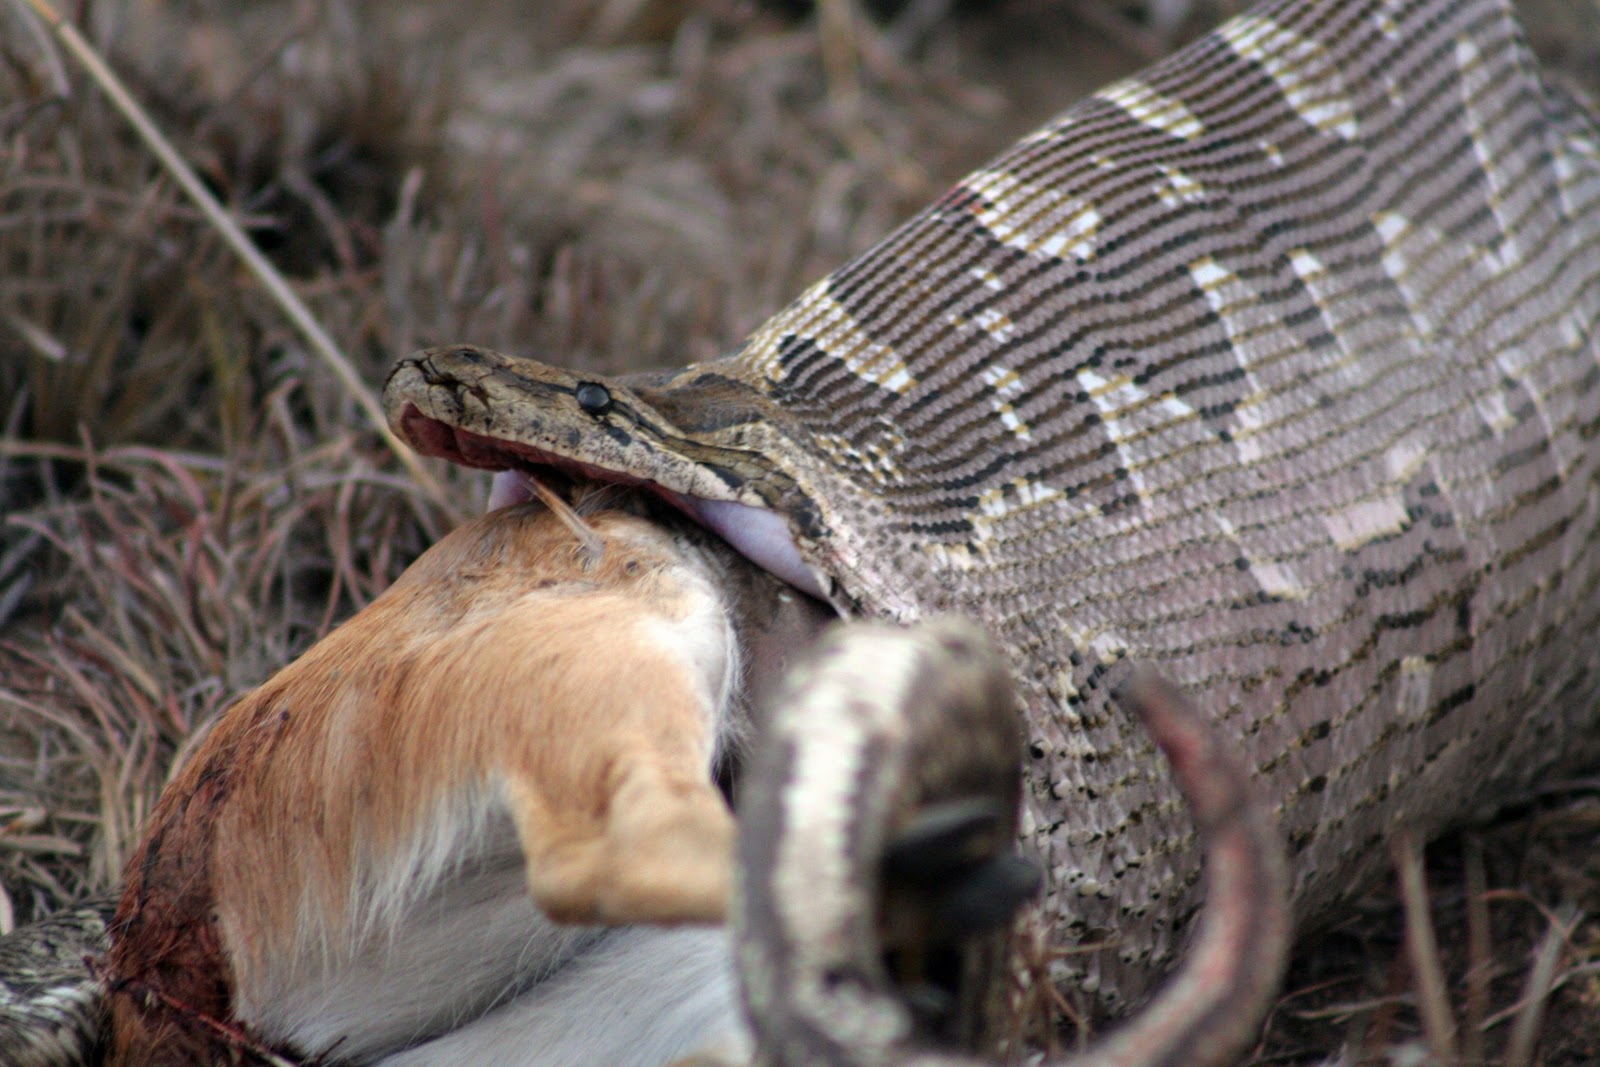 Florida contrata cazadores para acabar con plaga de serpientes pitones